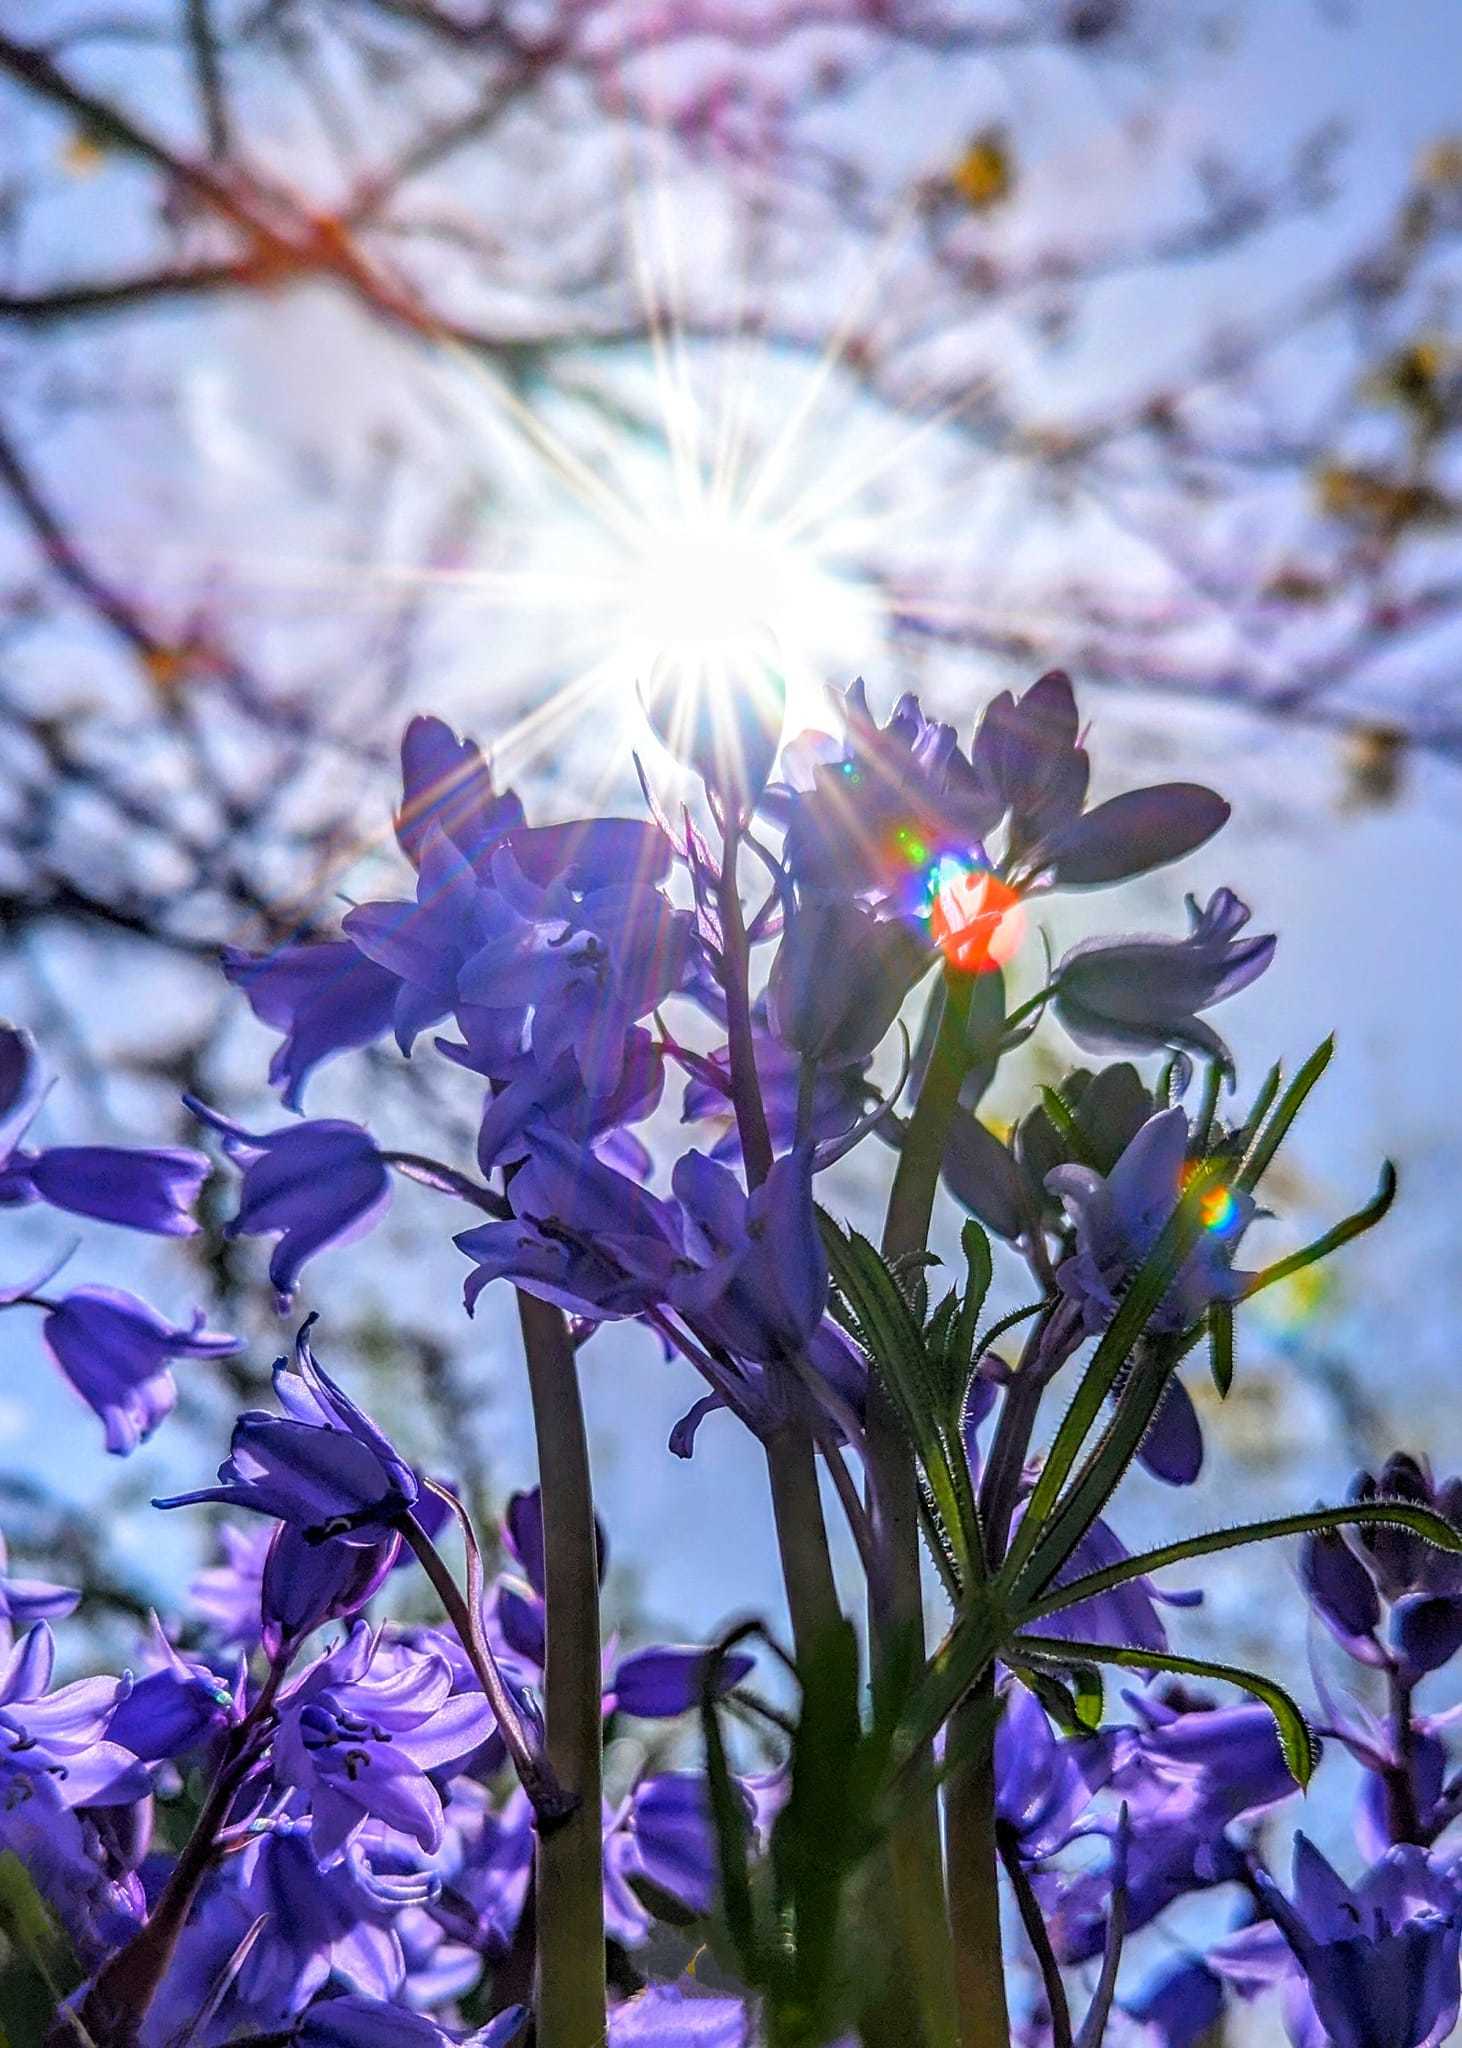 Sunlight on bluebells by Kimberley Phillips